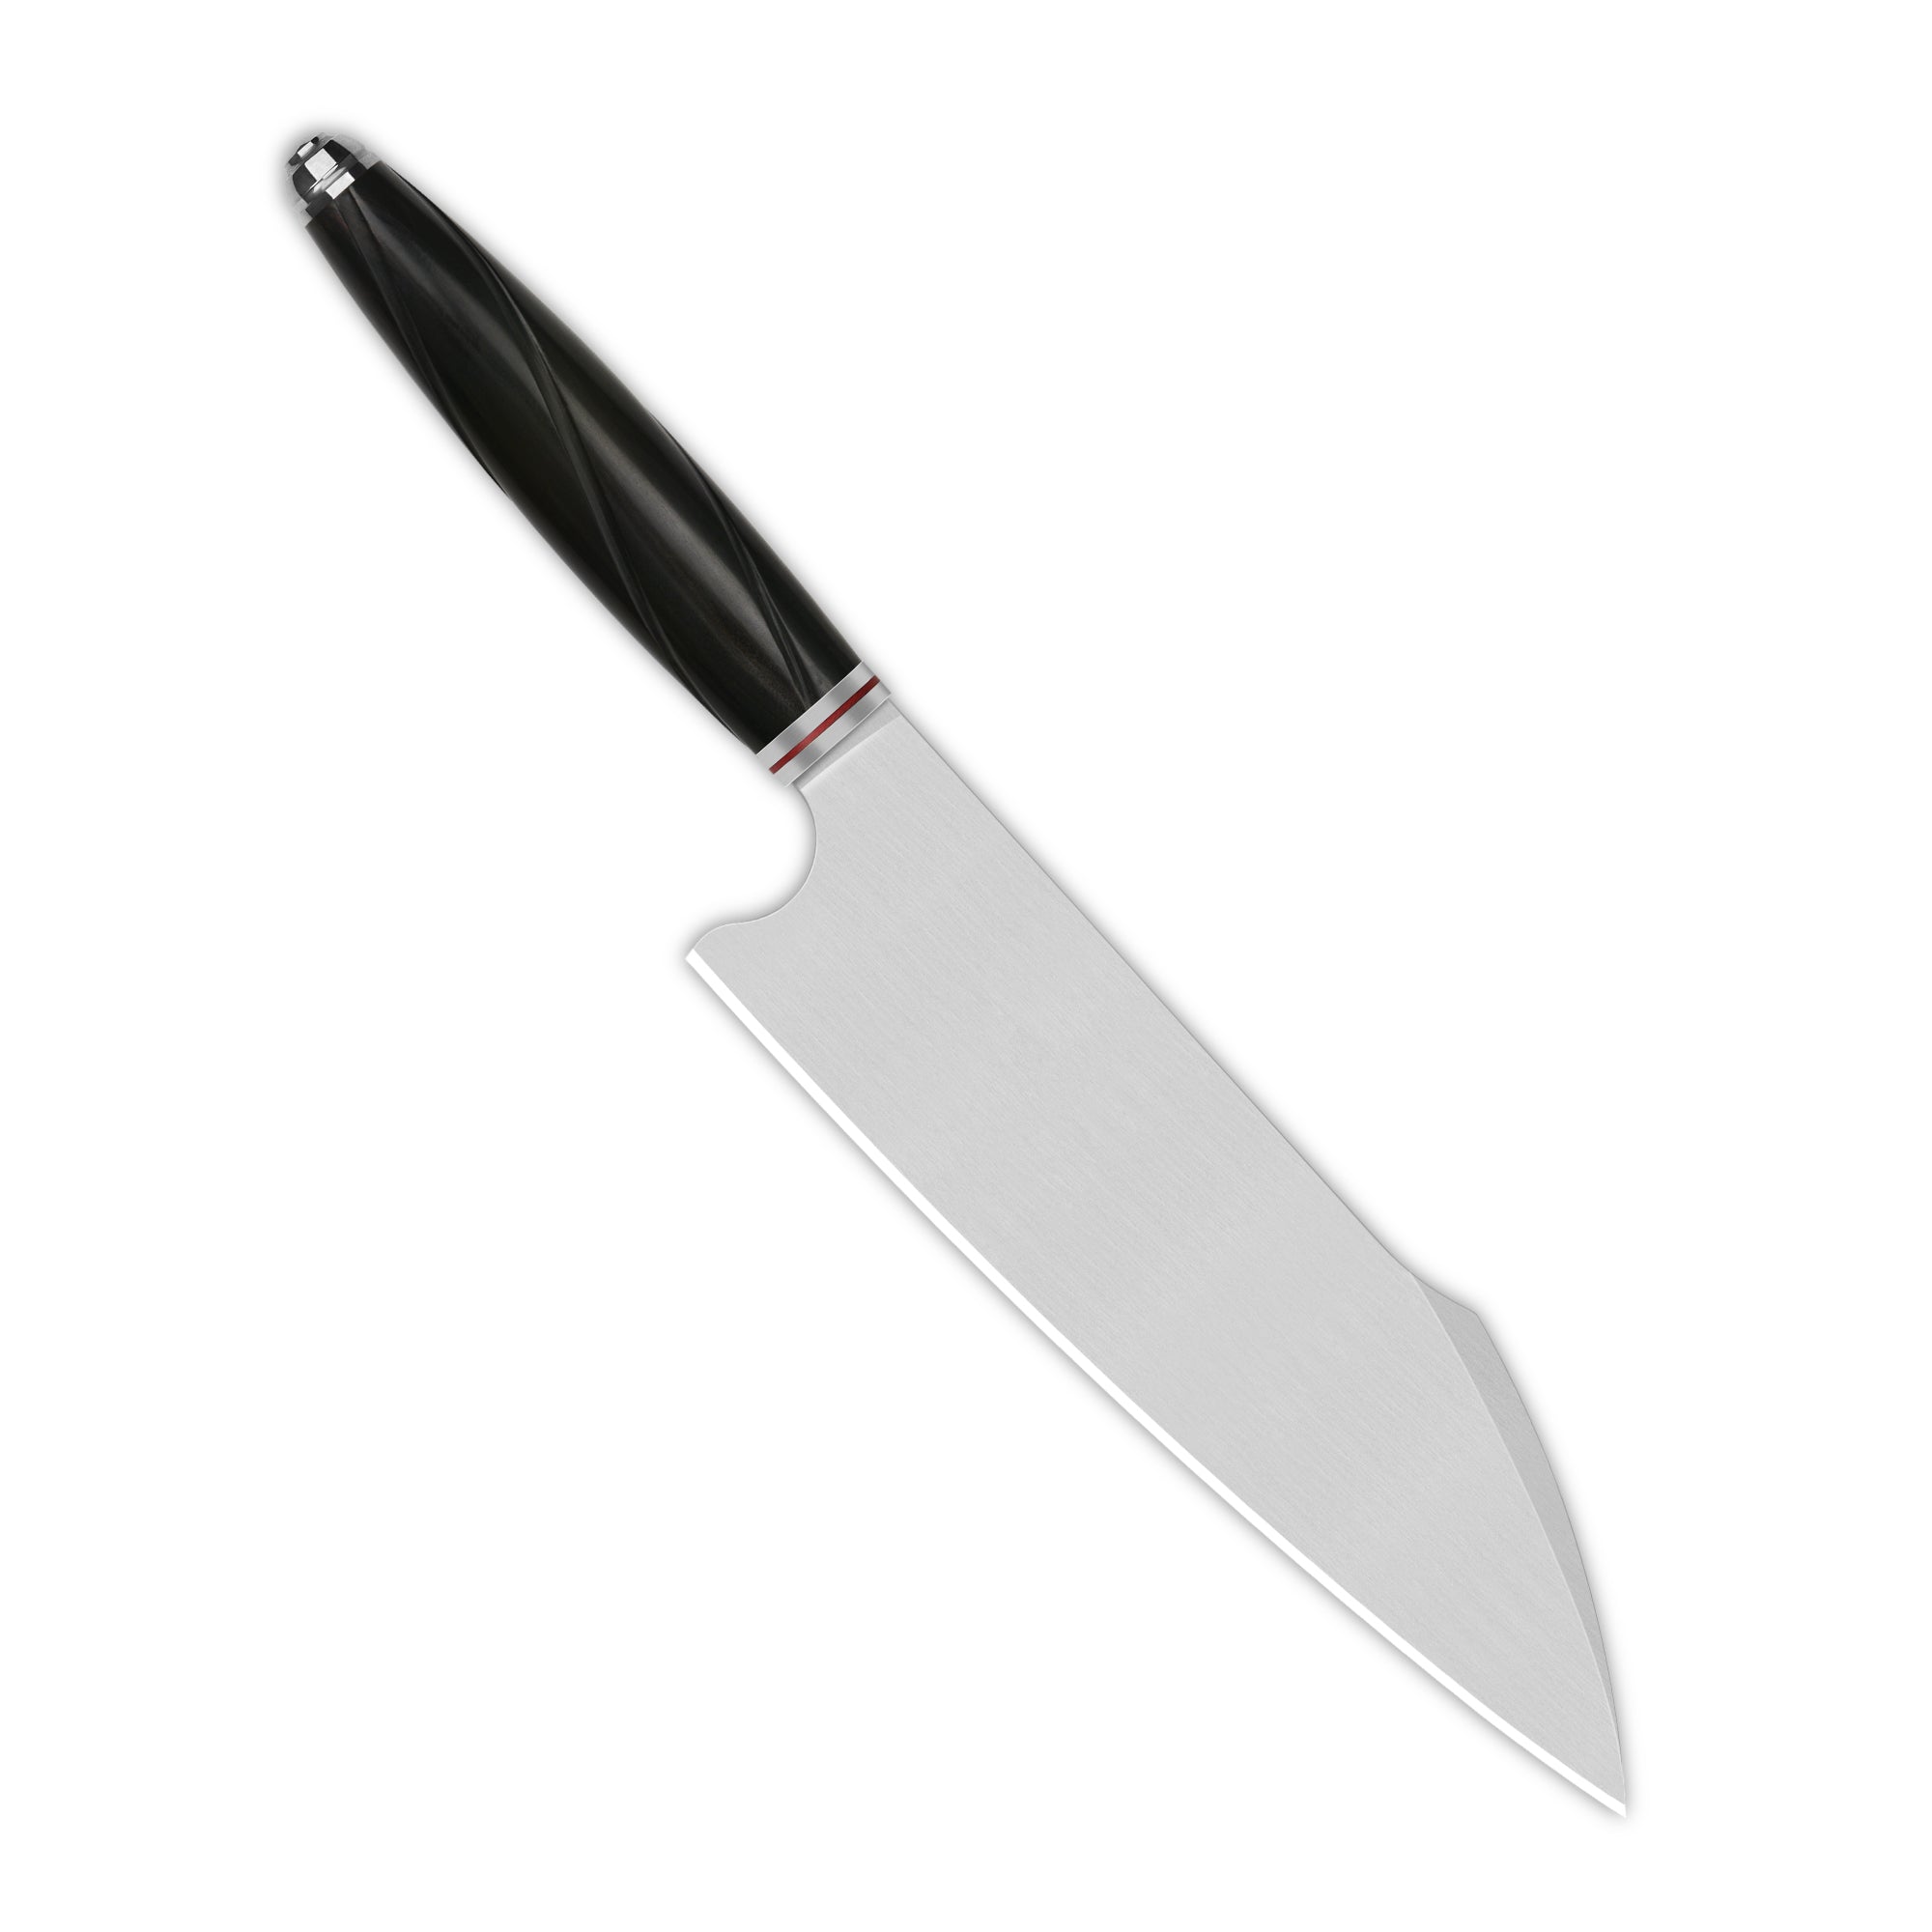 paring knife